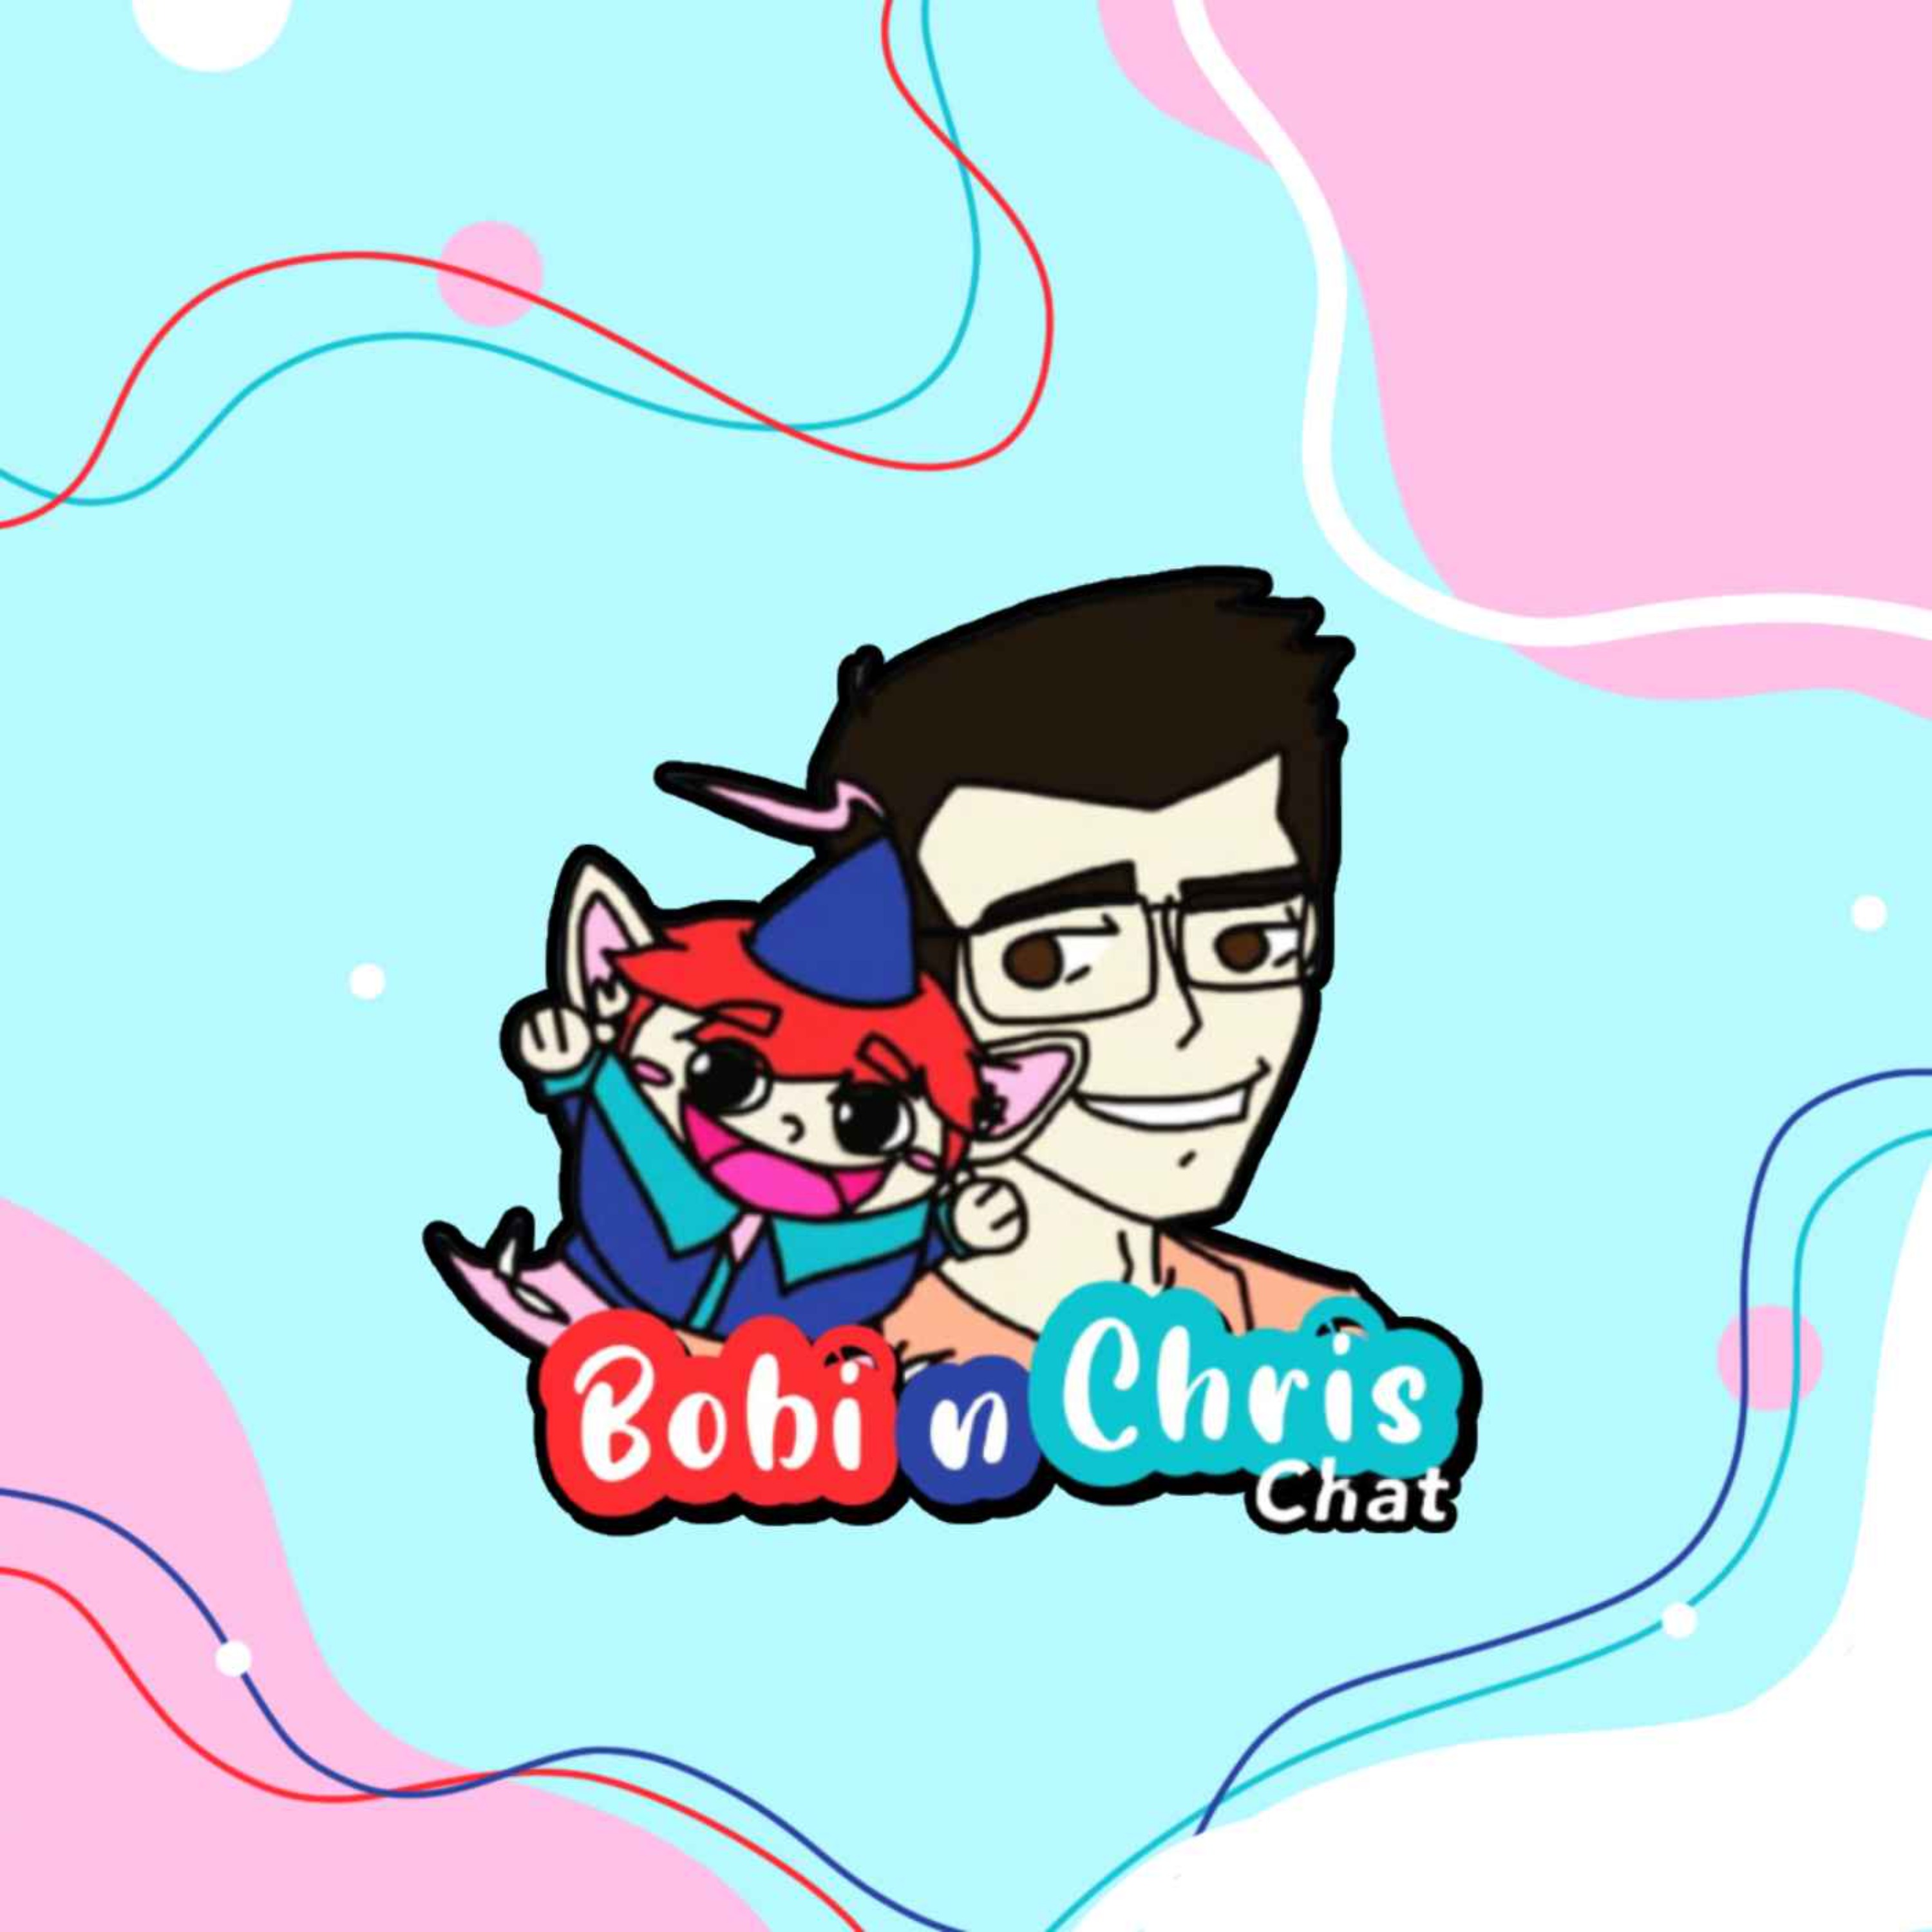 Sekilas tentang Bobi and Chris' Chat